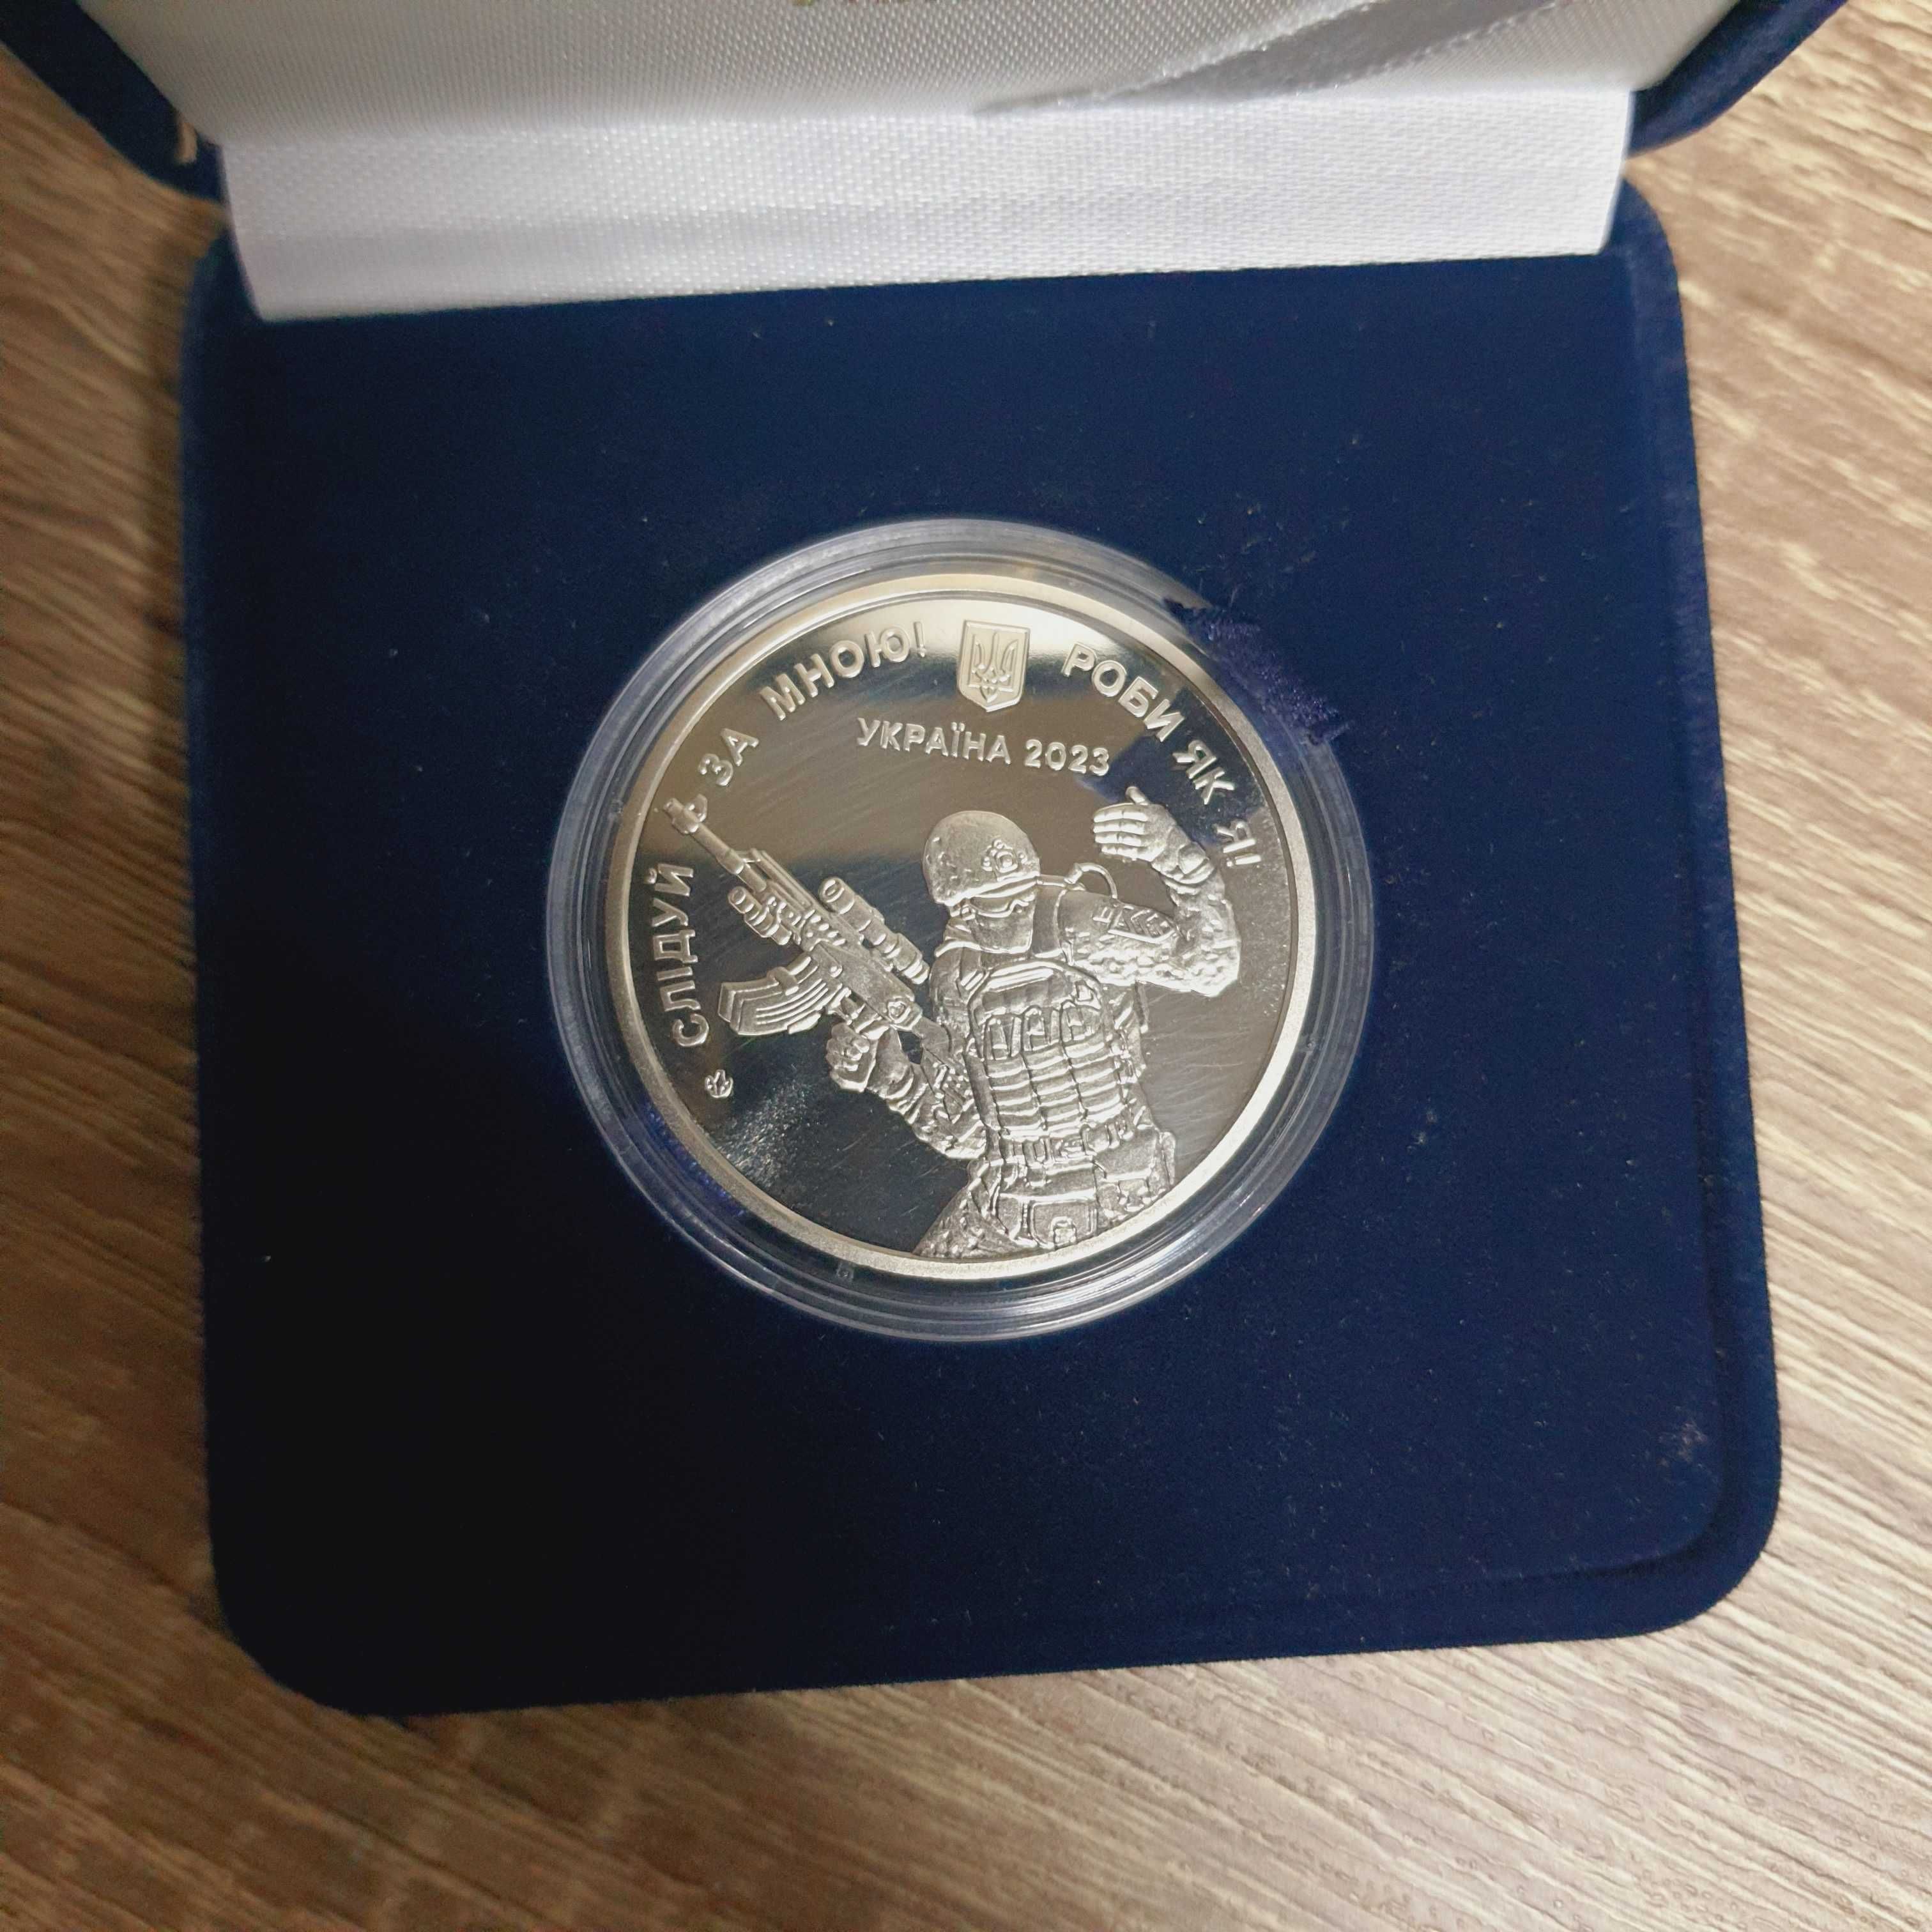 Медаль "Сержантський корпус" подарок для чоловіка медаль ЗСУ